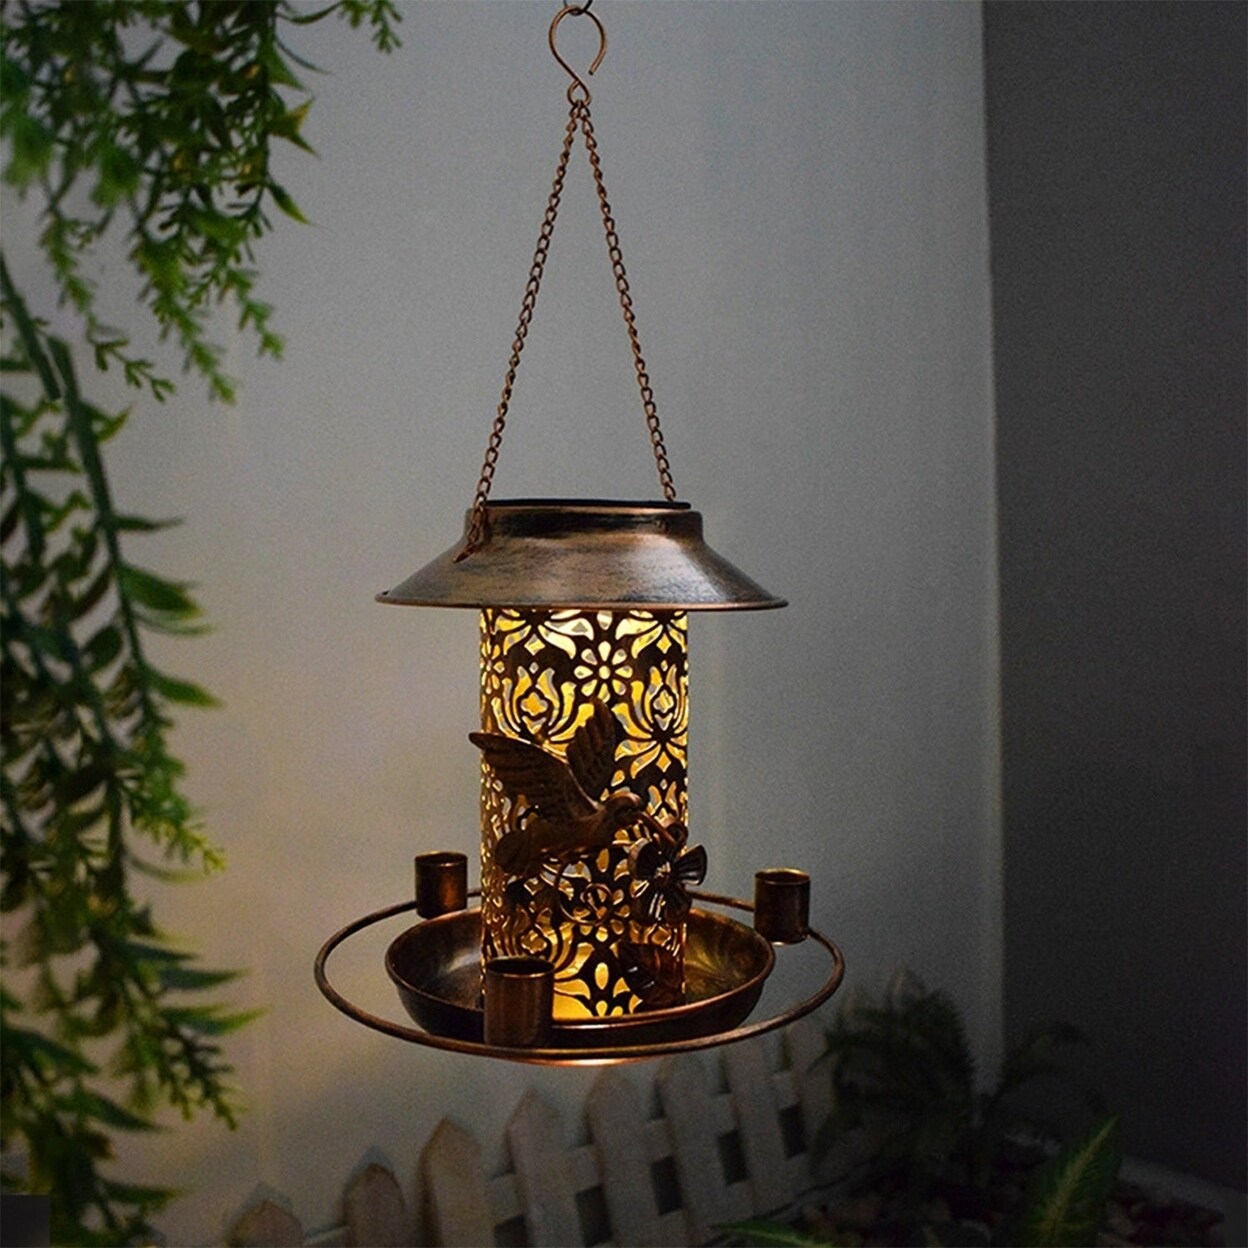 SKUSHOPS Solar Bird Feeder Decorative Hanging Bird Feeder Lantern Warm White Light Bird Feeder for Outdoor Garden Backyard